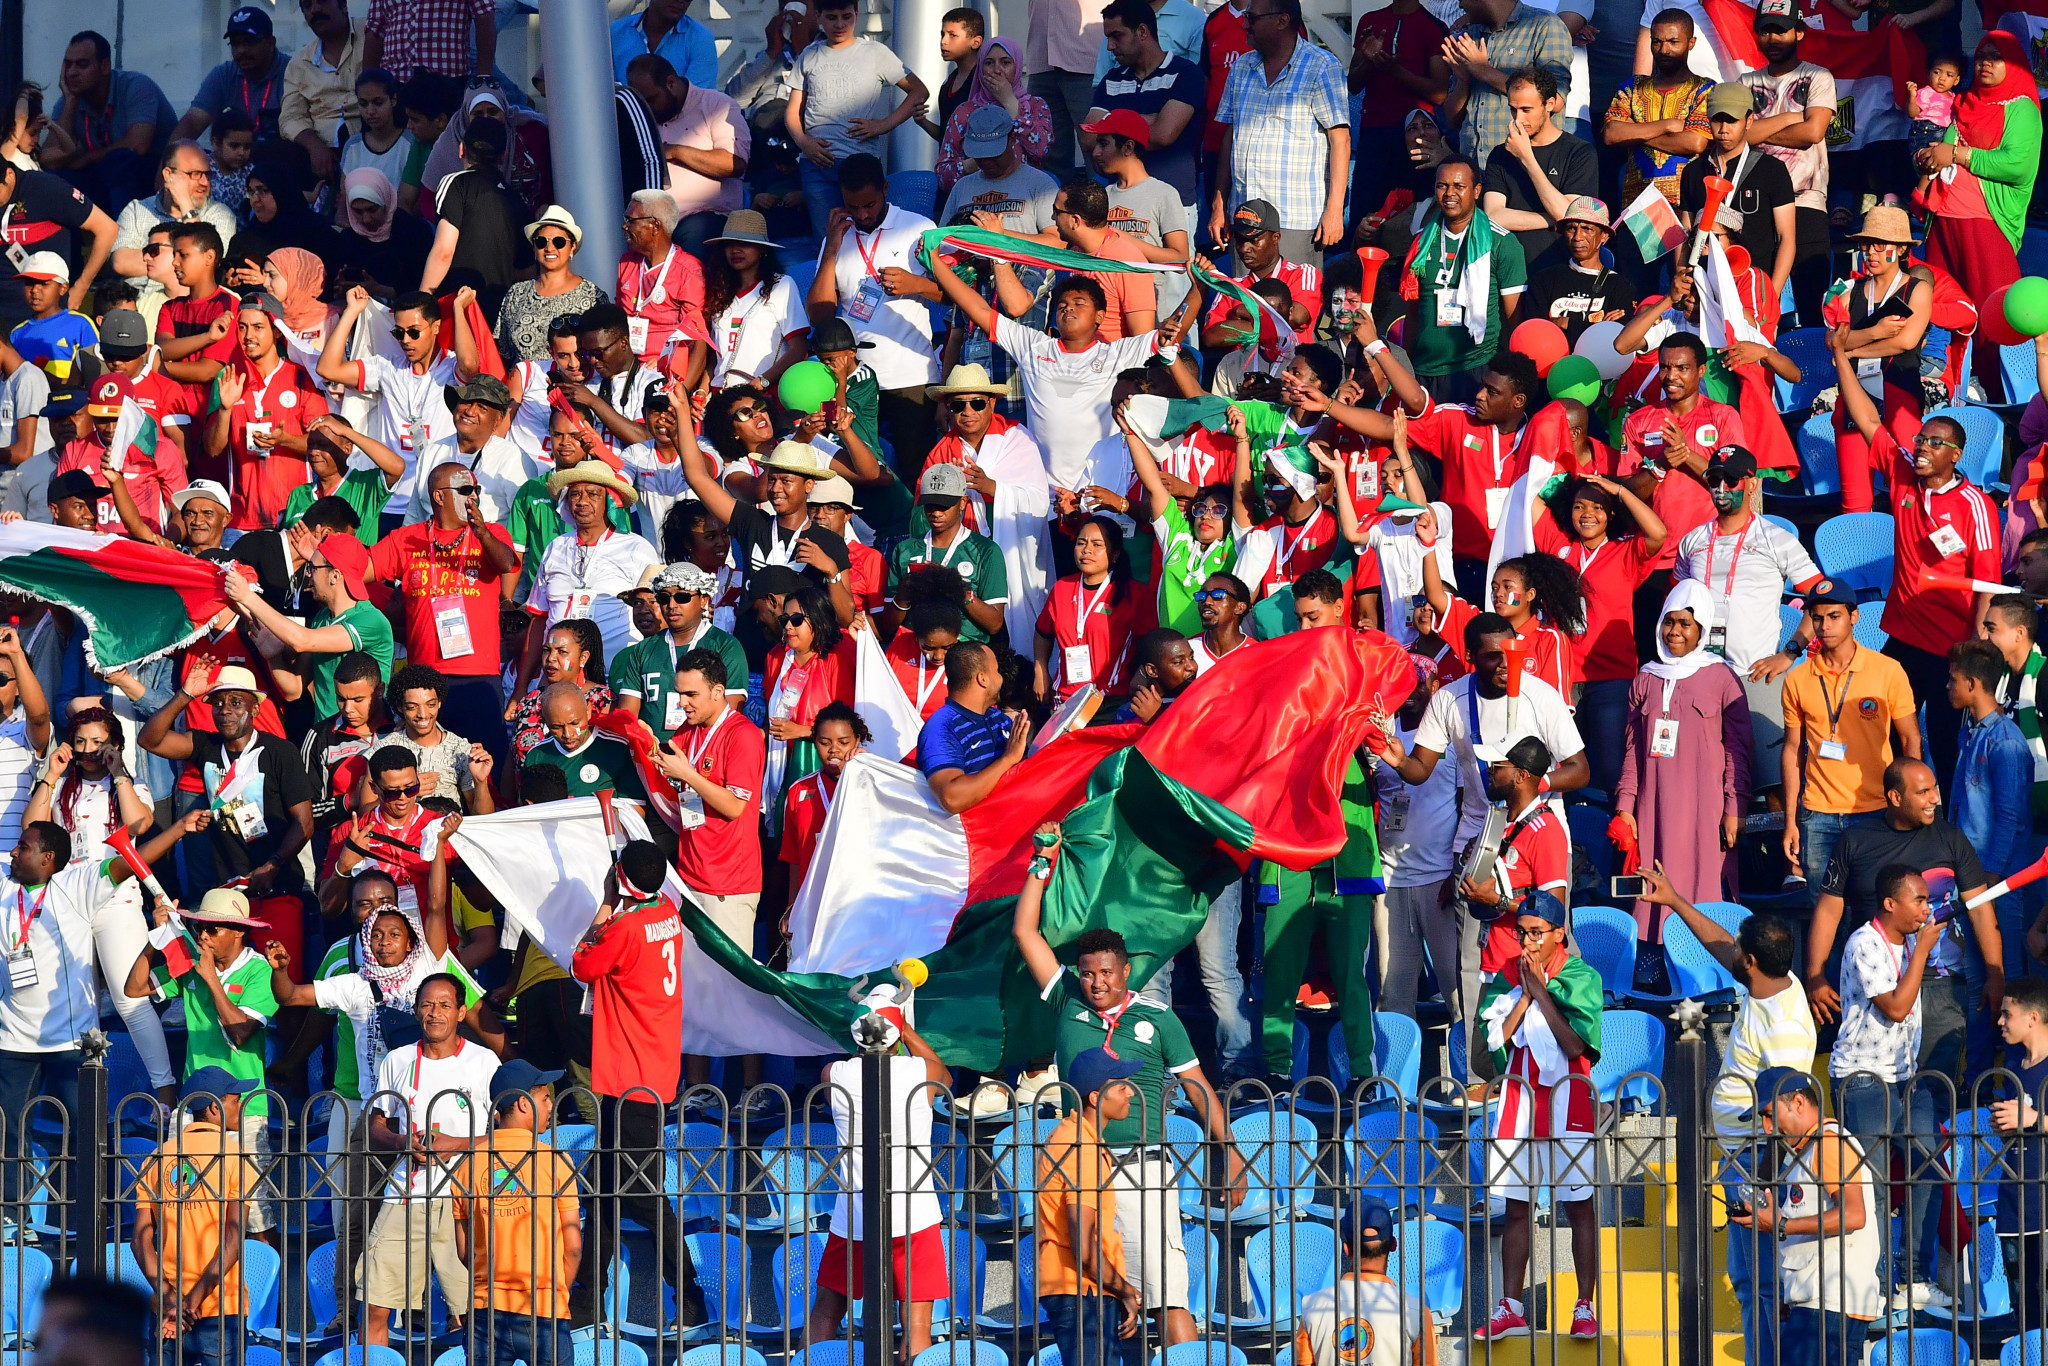 Ilaimaharitra sinks Burundi as Madagascar claim first win at a major tournament